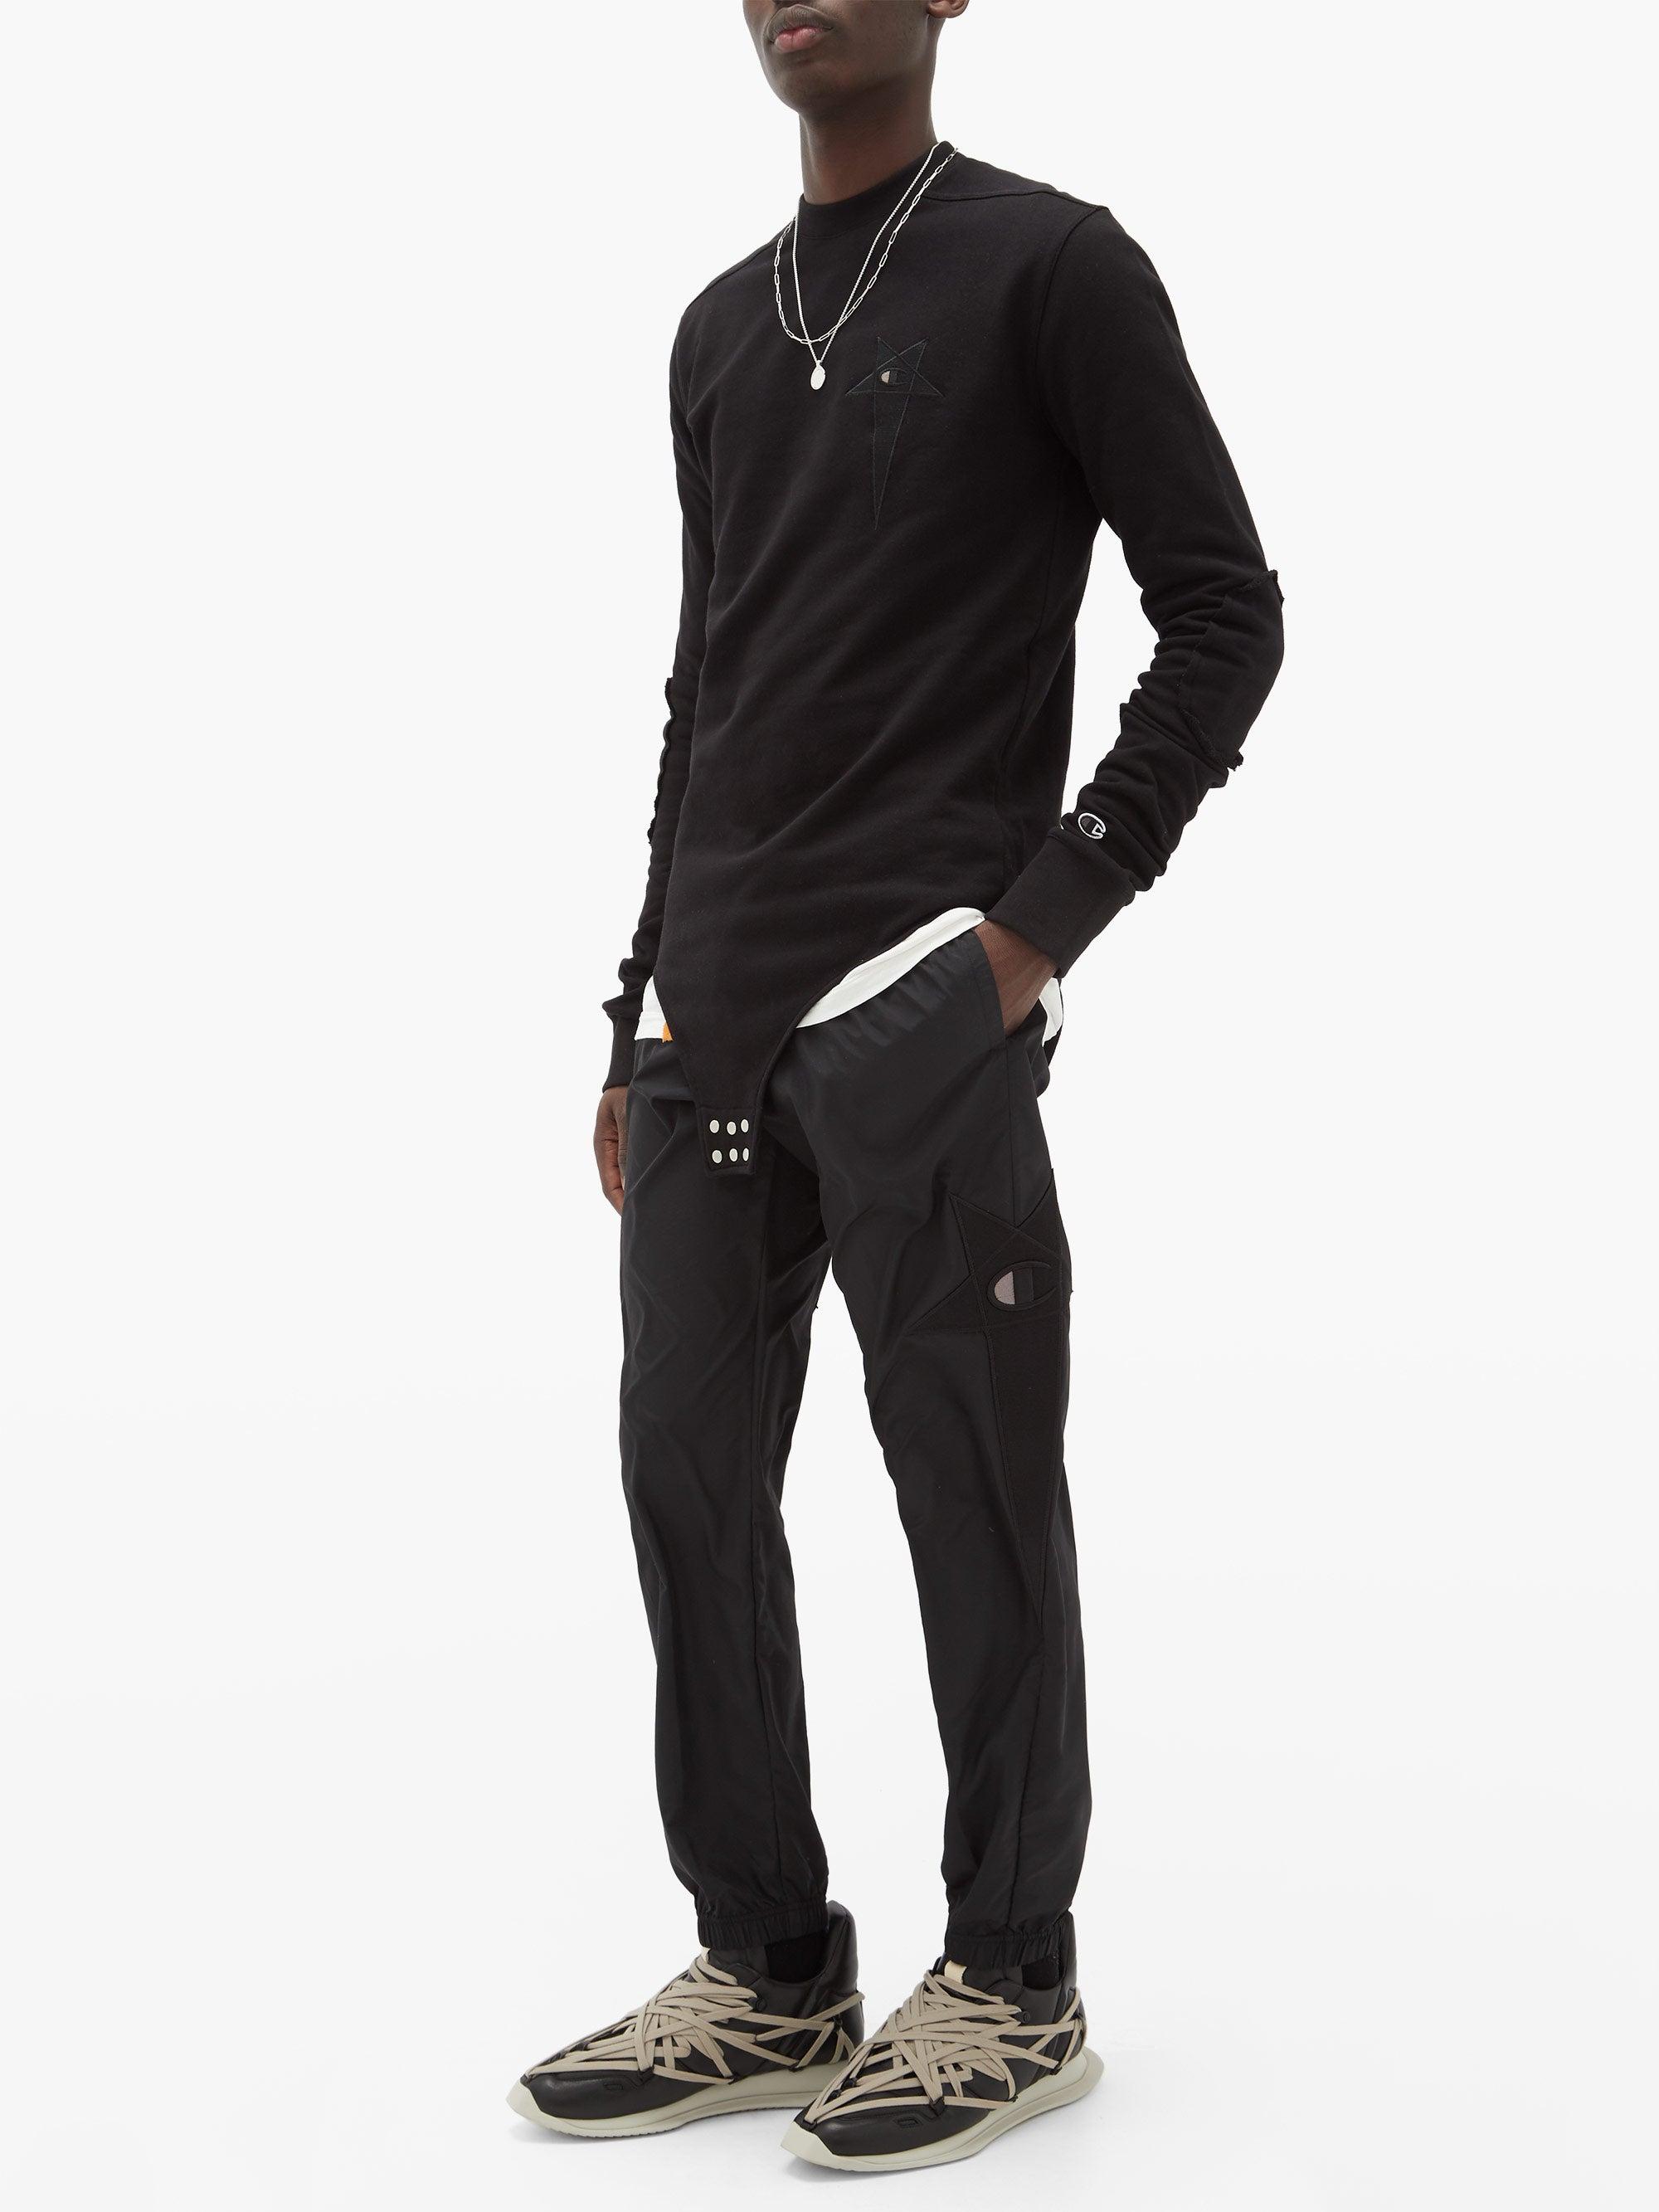 Rick Owens Maximal Runner Sneakers in Black for Men | Lyst Canada